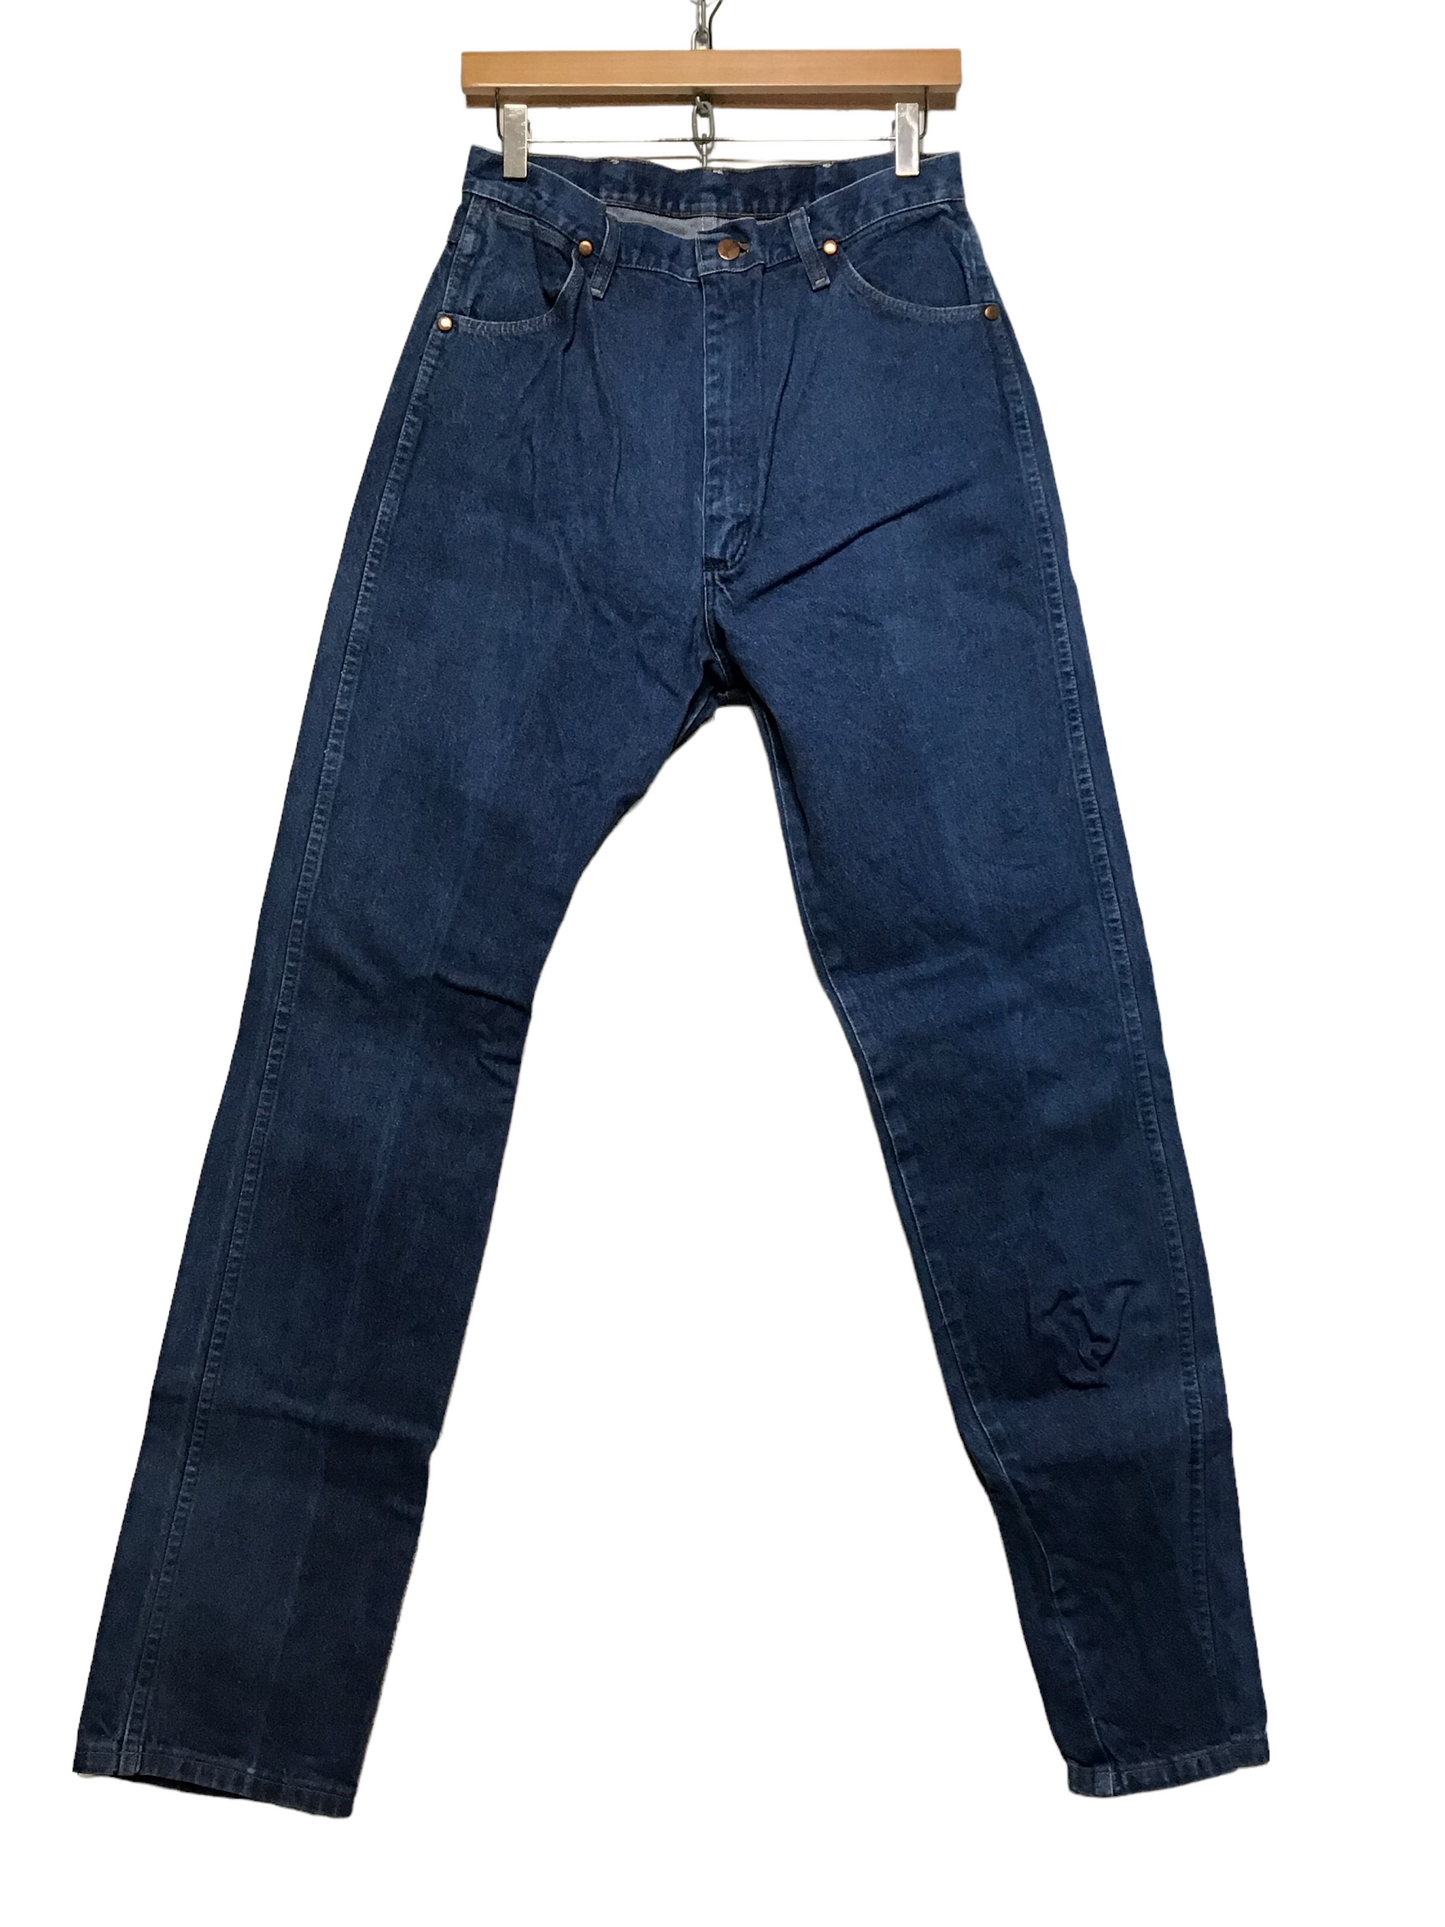 Wrangler Jeans (30X35)